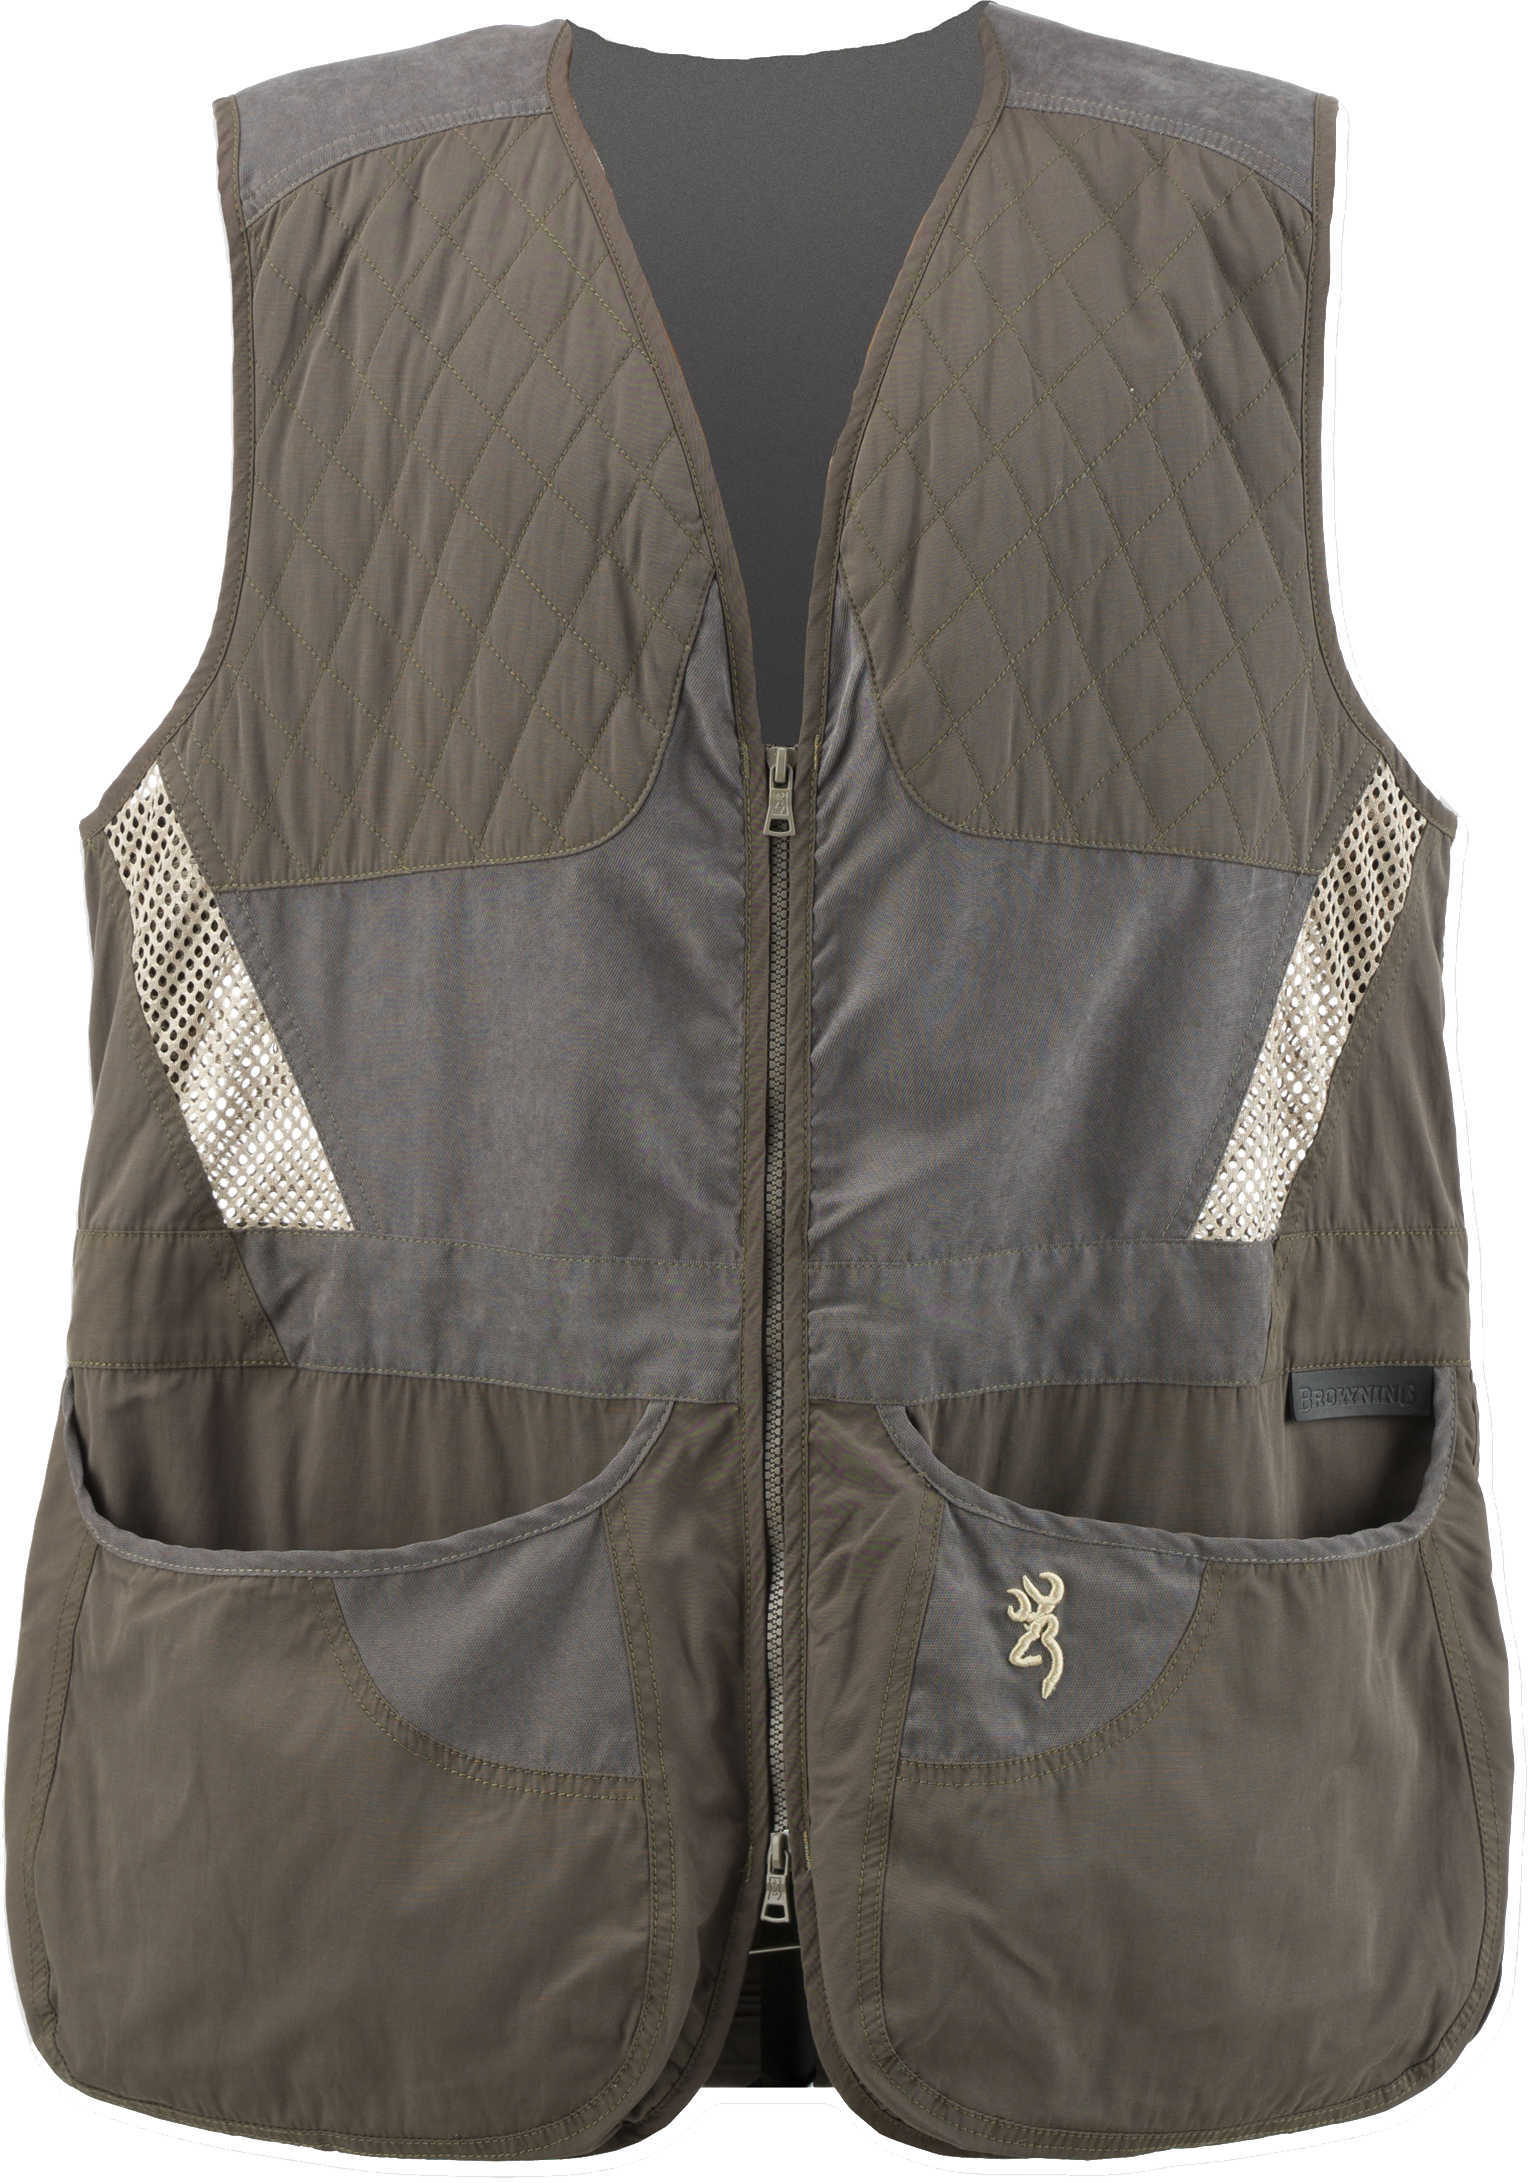 Browning Mens Summit Vest, Green/Dark Grey Large Md: 3050318403